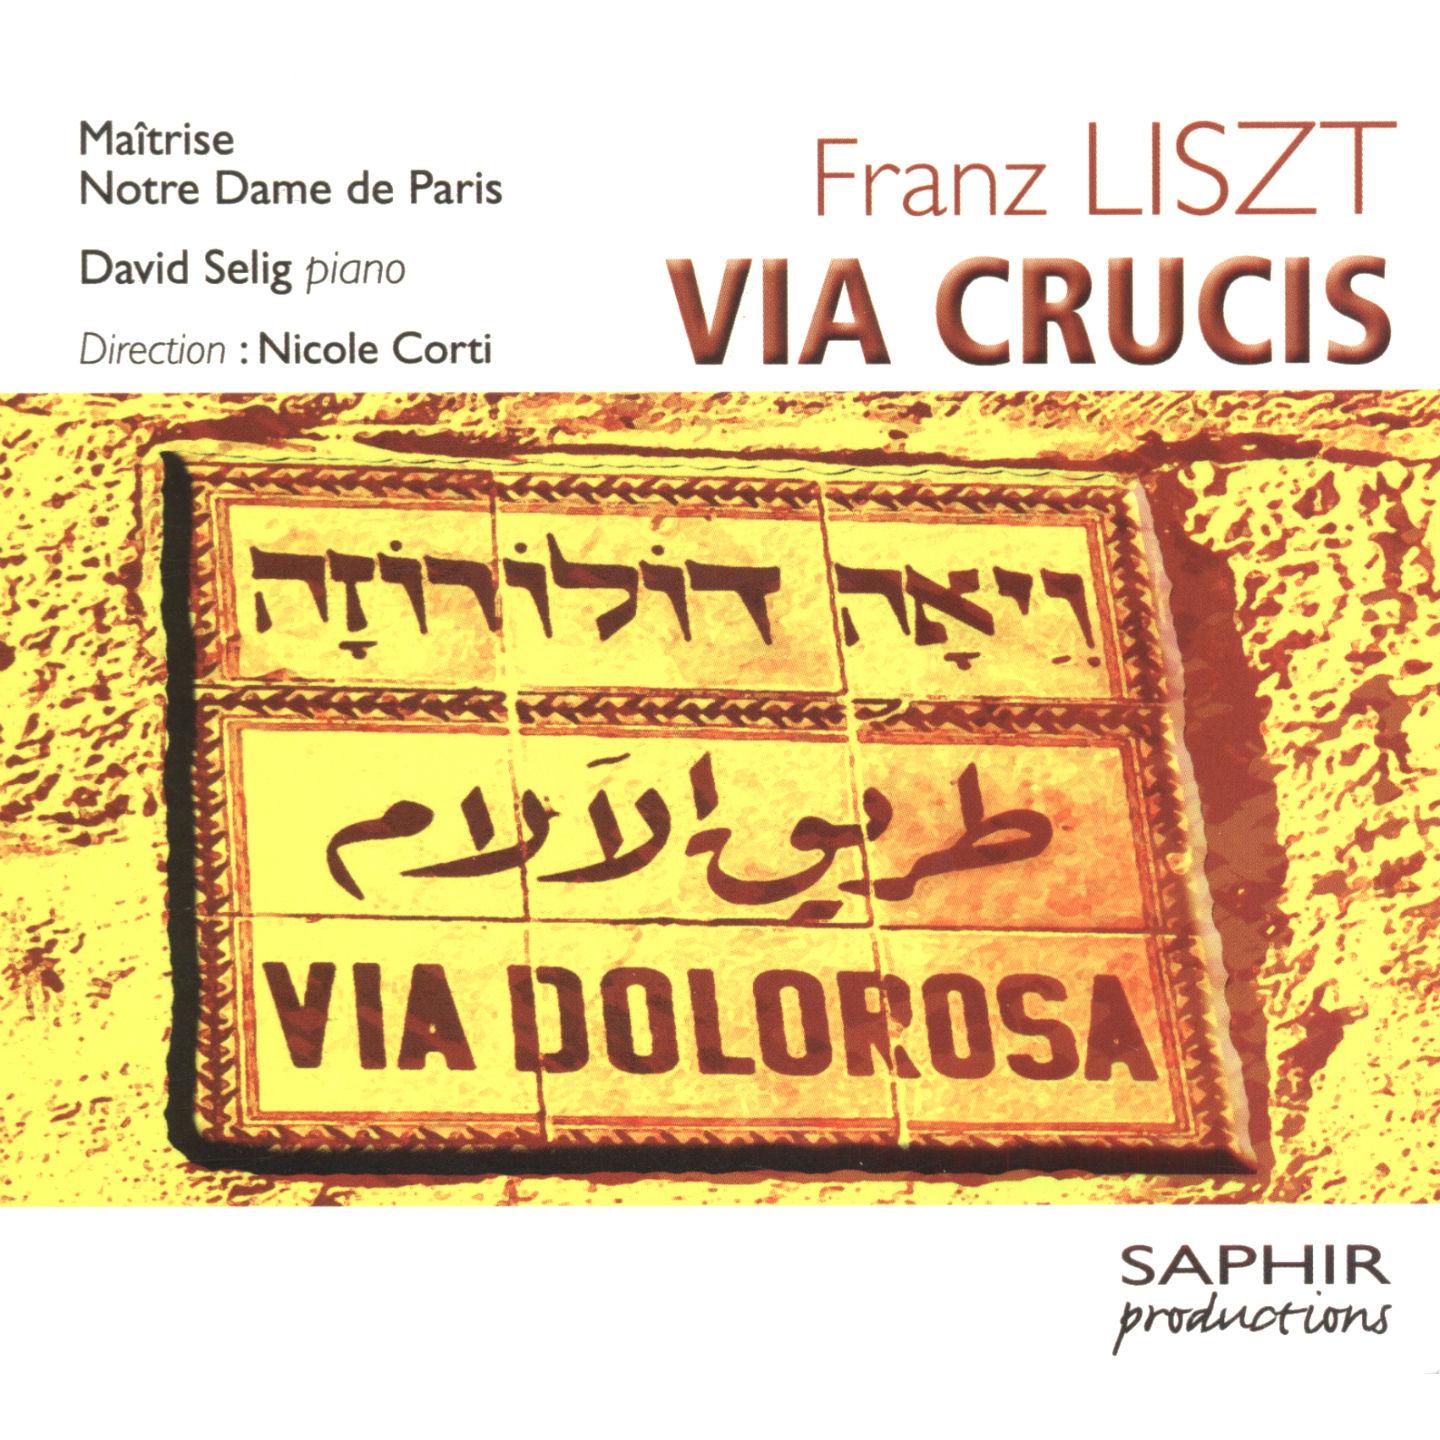 Liszt: Via crucis